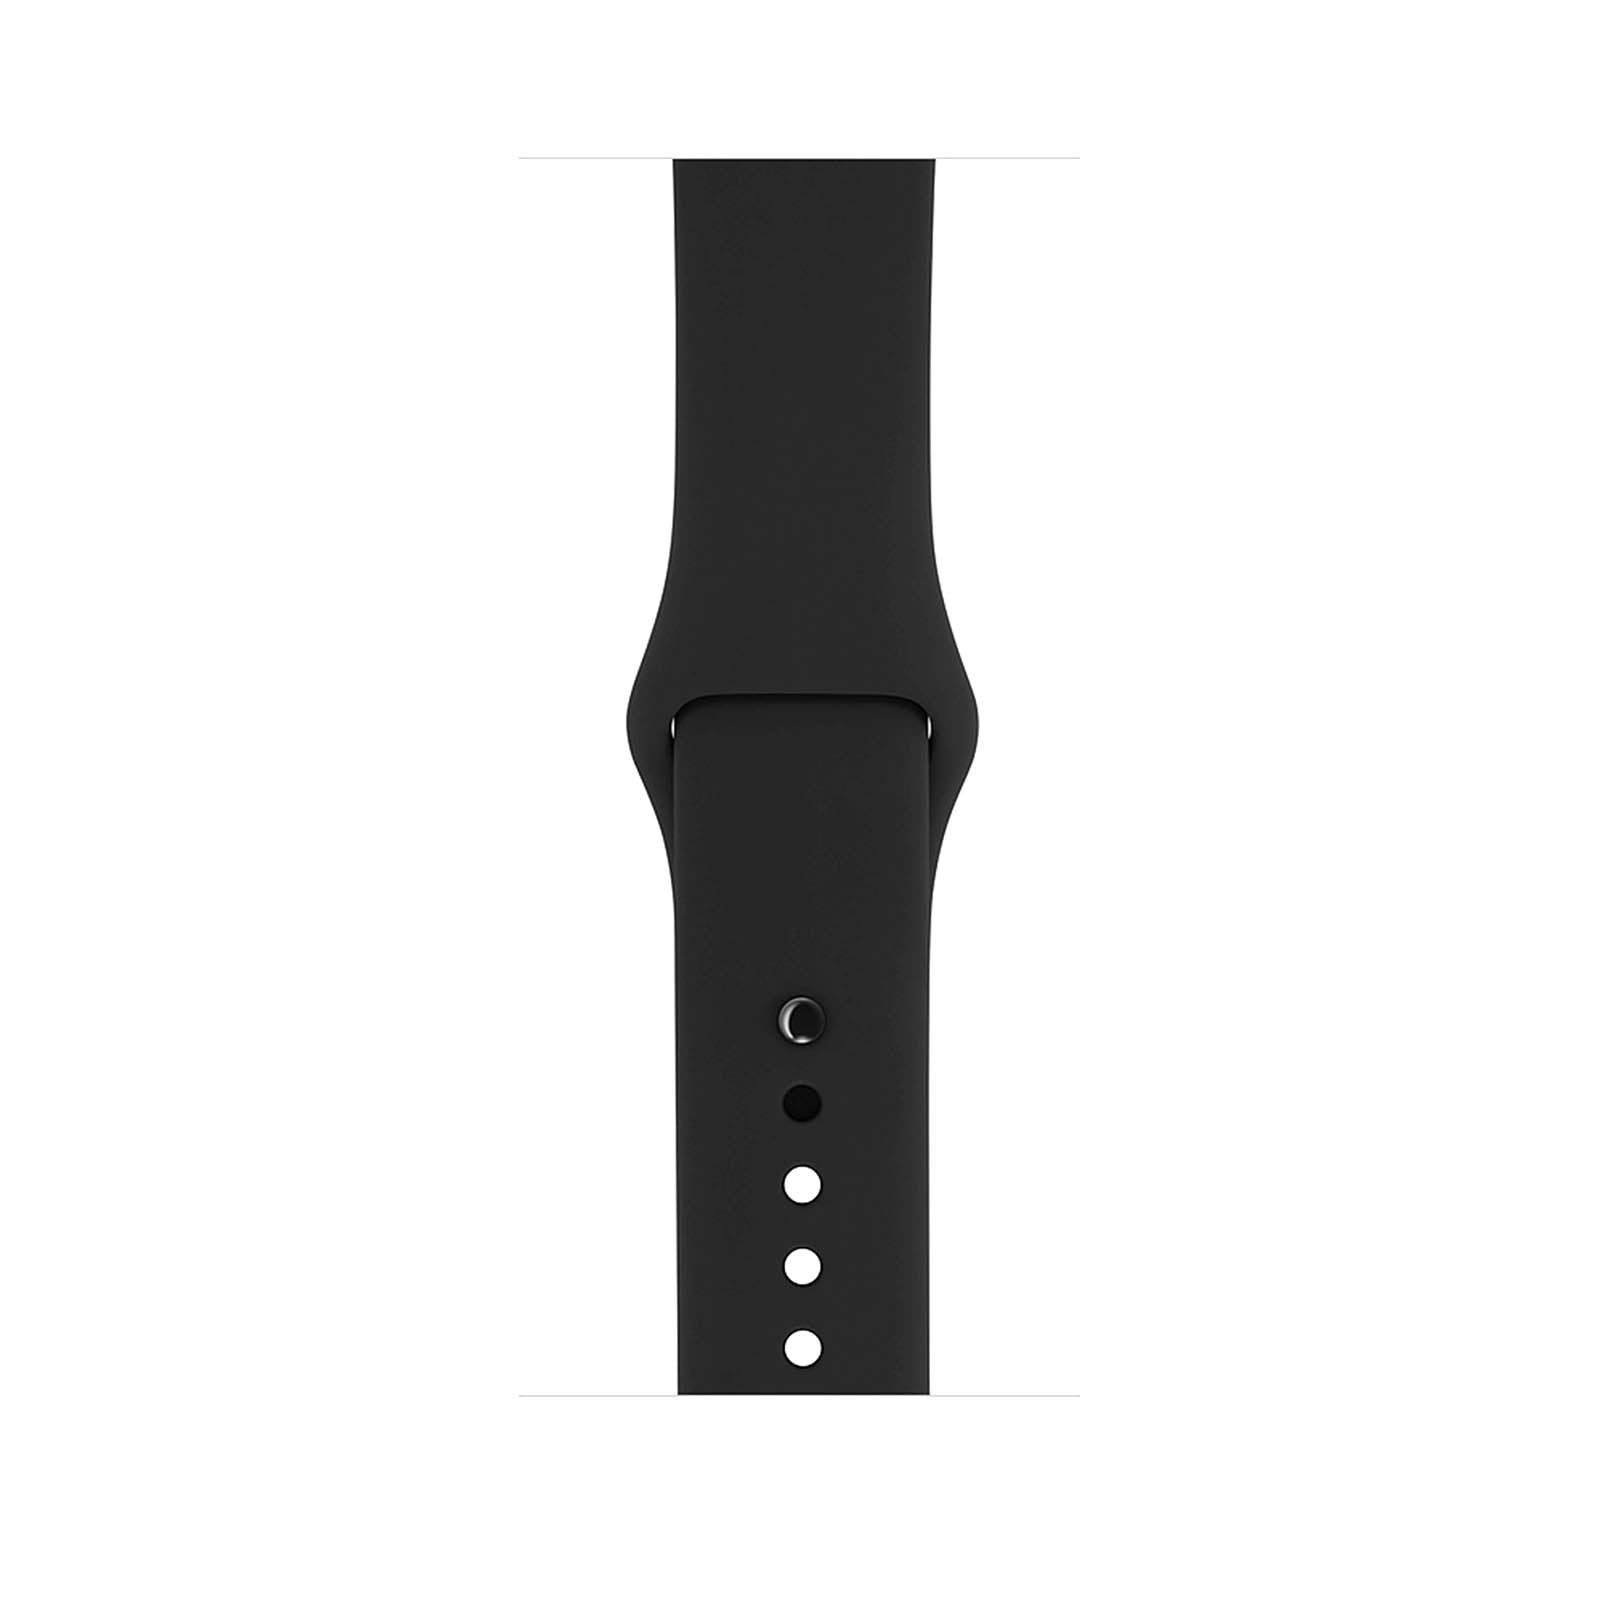 Apple Watch Series 4 Stainless 40mm Black Very Good Cellular - Unlocked